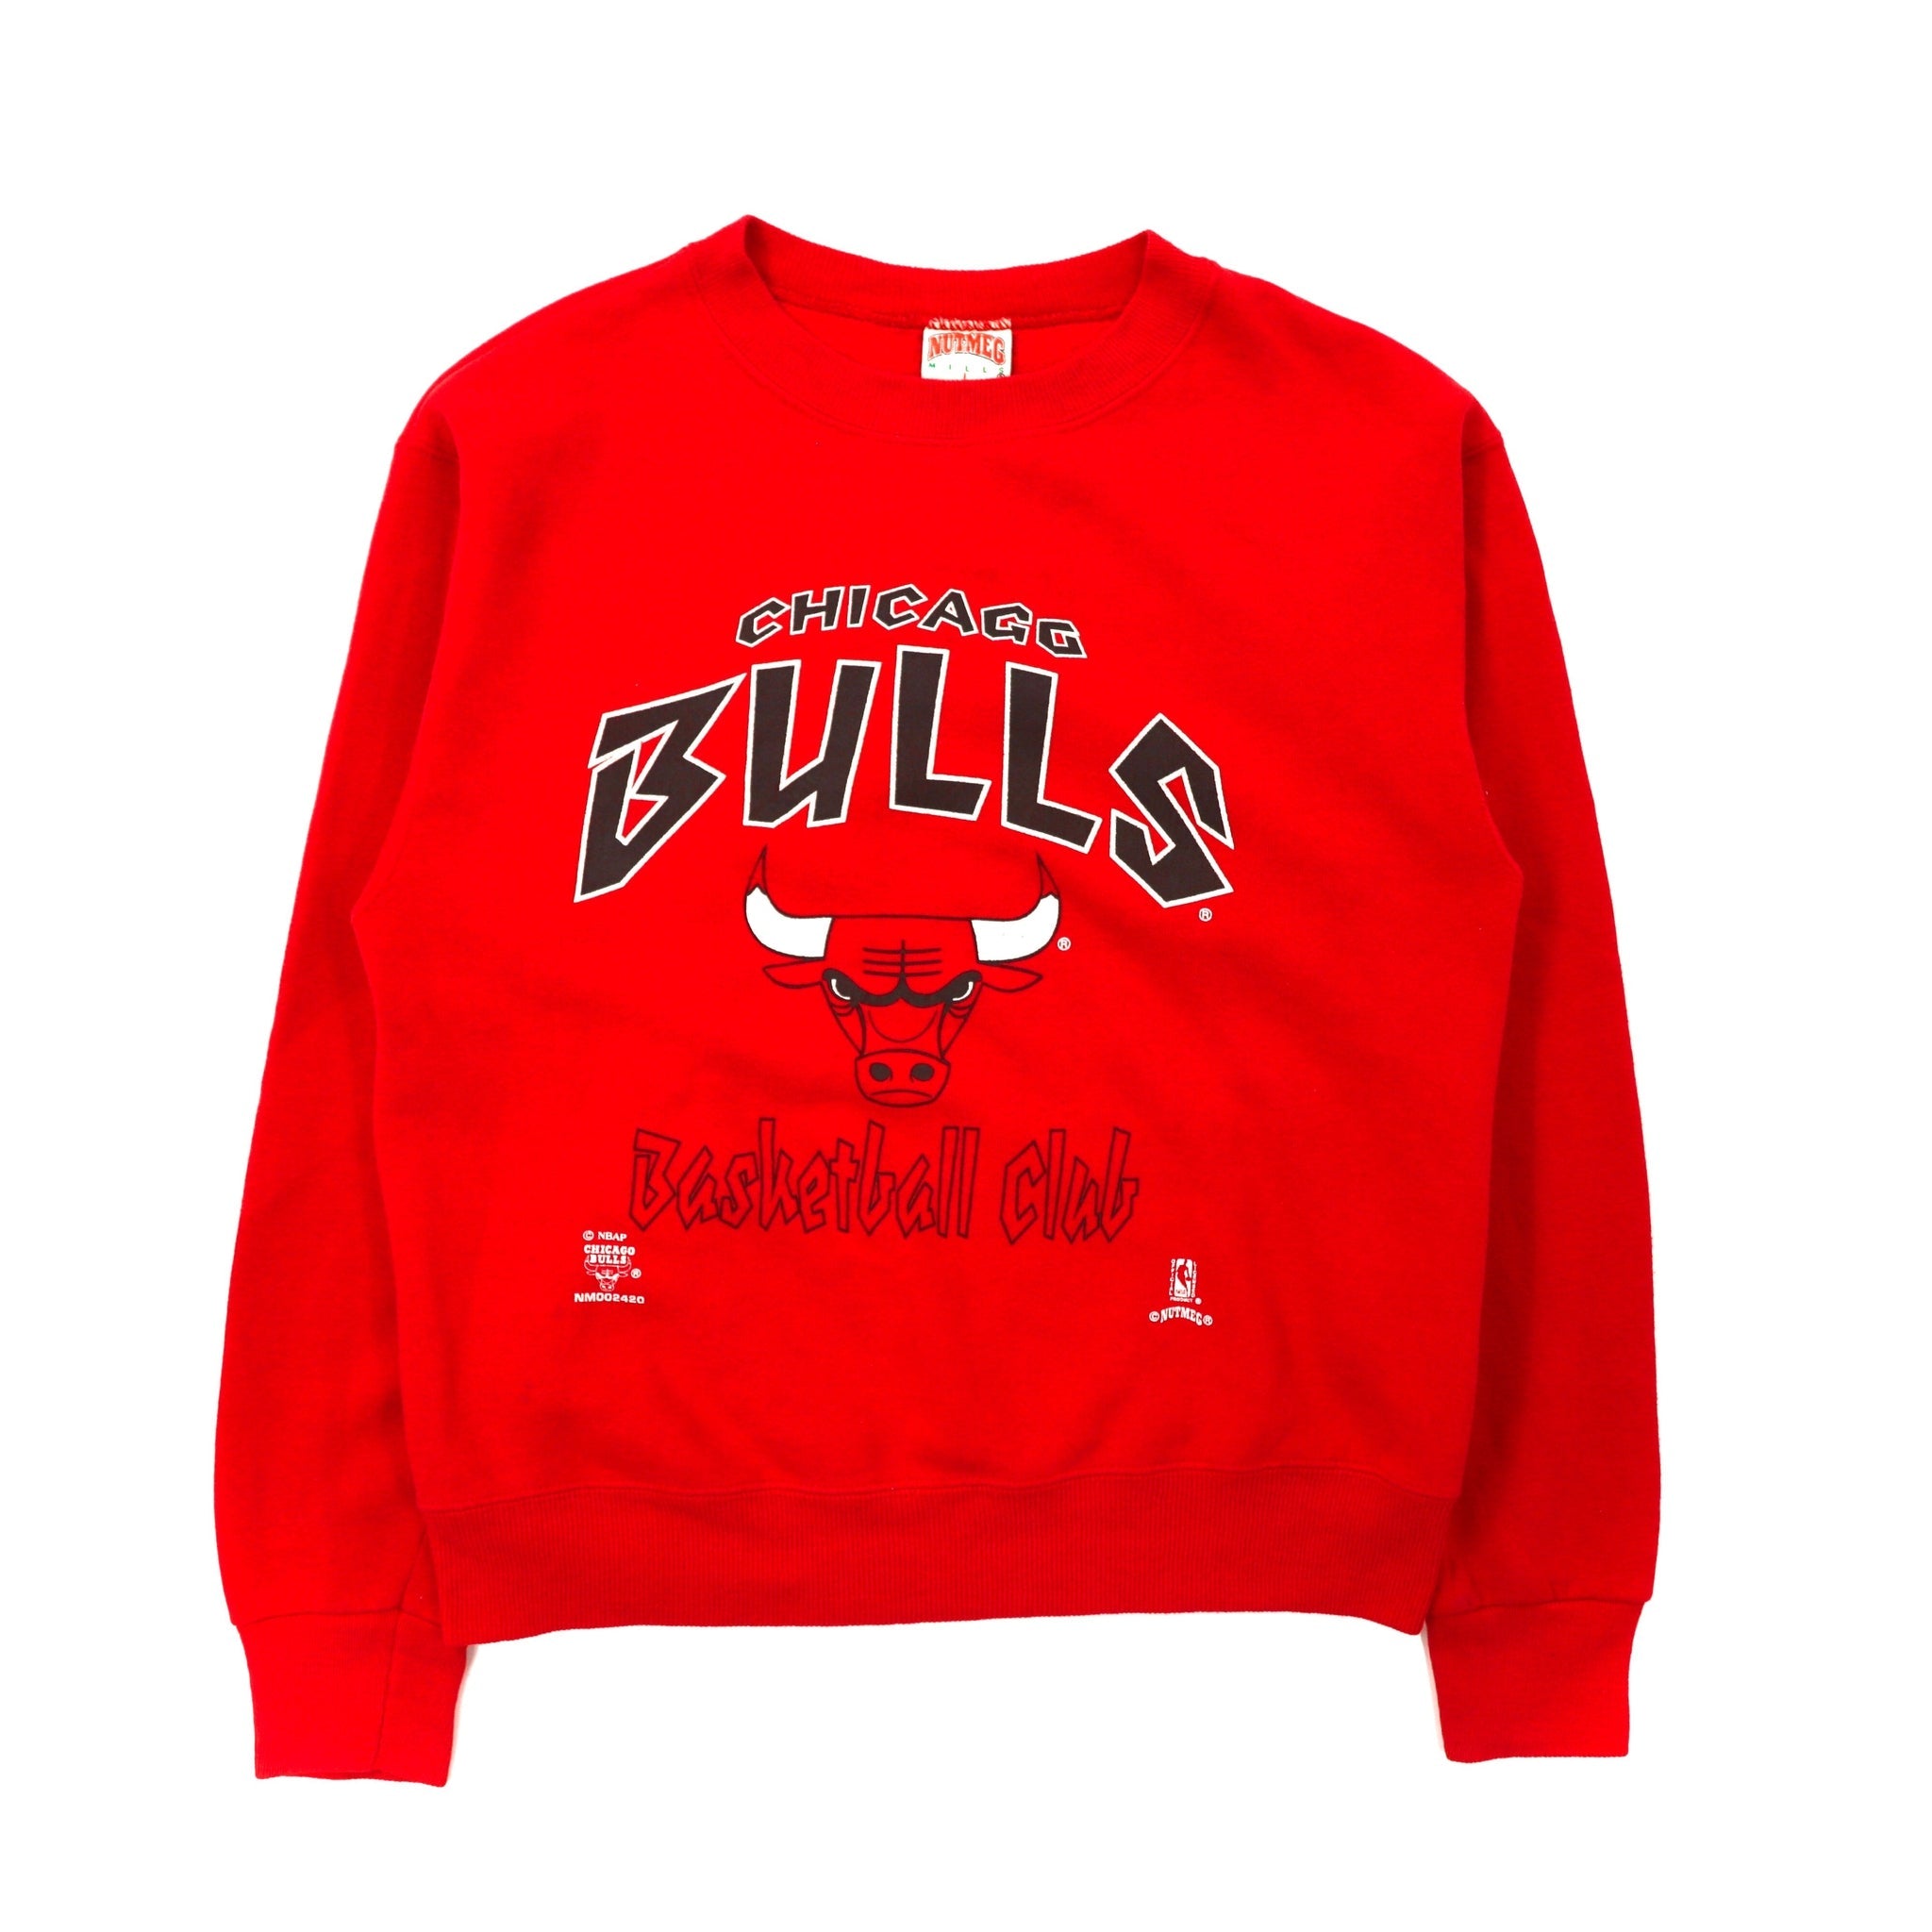 NutMeg Sweatshirt L Red Chicago Bulls 90s Made in USA NBA